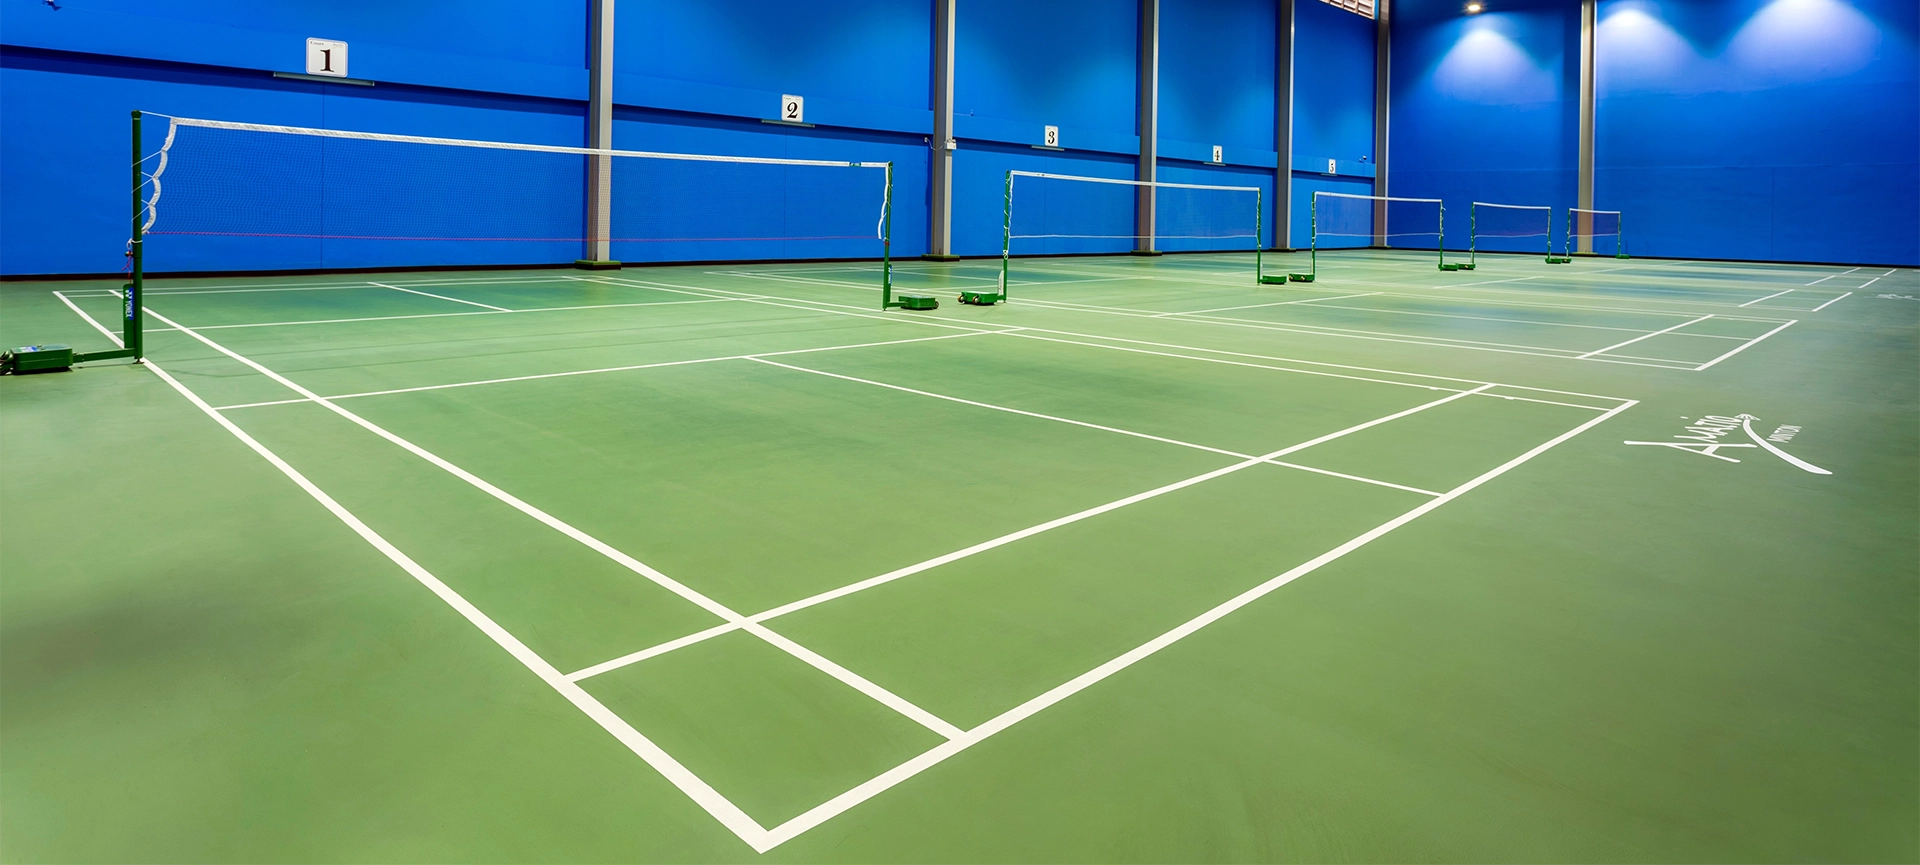 comparing tennis court dimensions